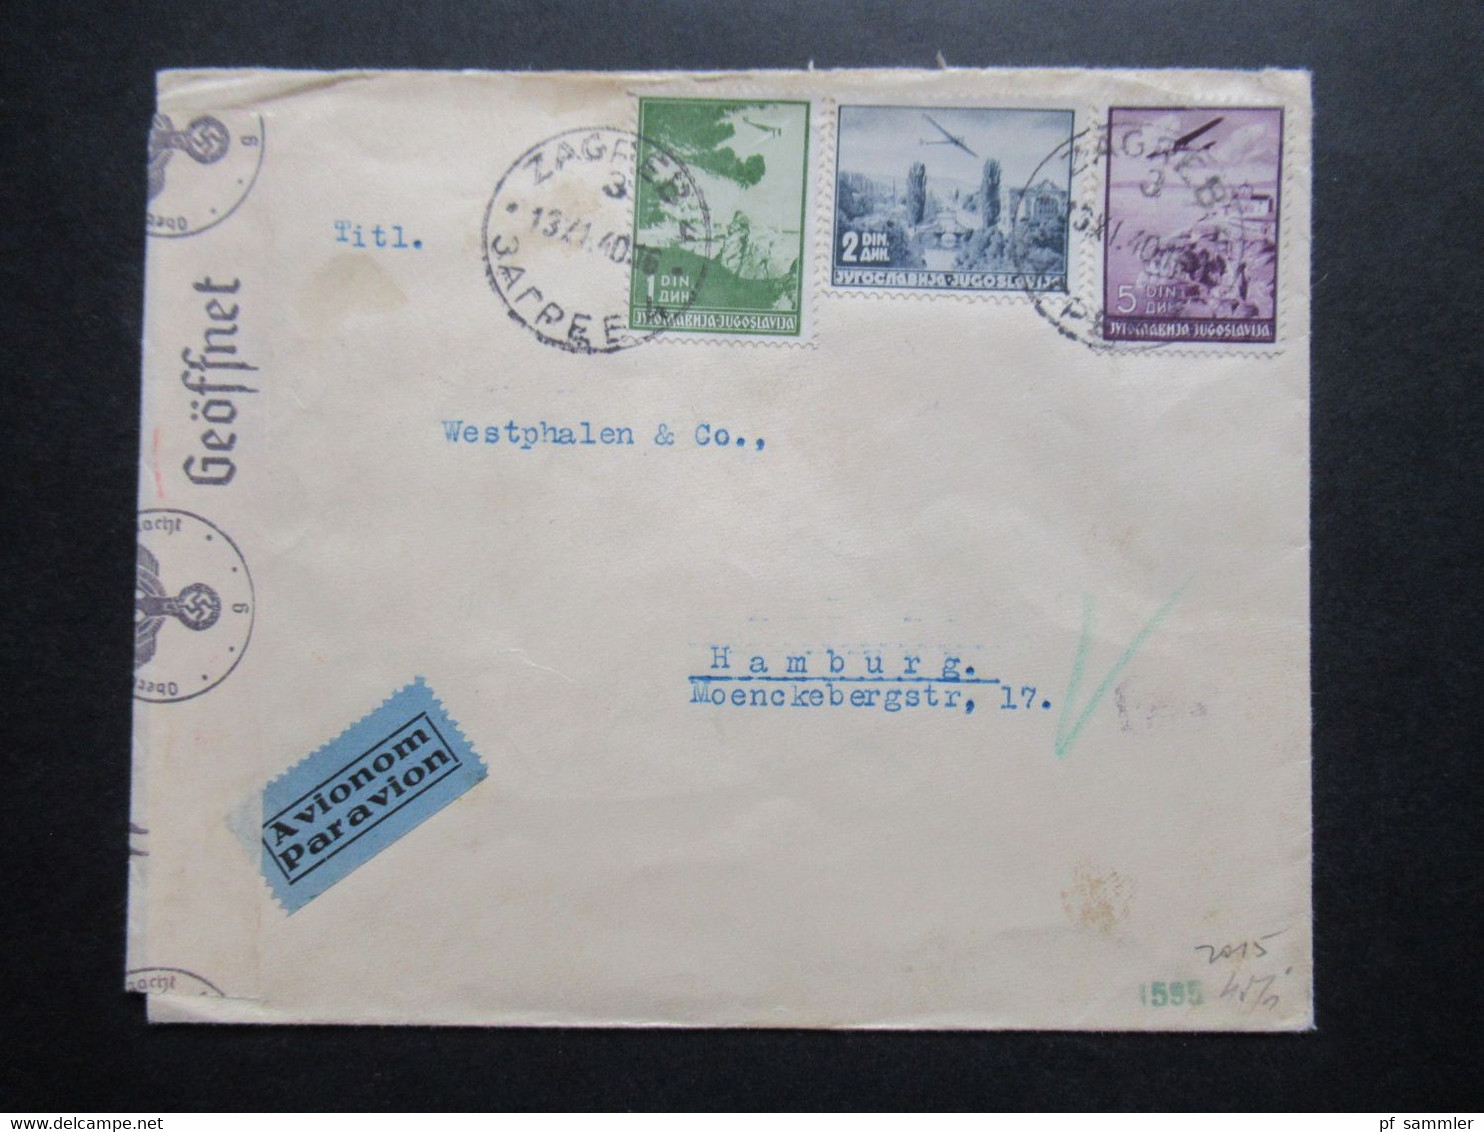 Jugoslawien 1940 Zensurbeleg / OKW Zensur / Mehrfachzensur Luftpost Zagreb An Westphalen & Co. In Hamburg - Lettres & Documents